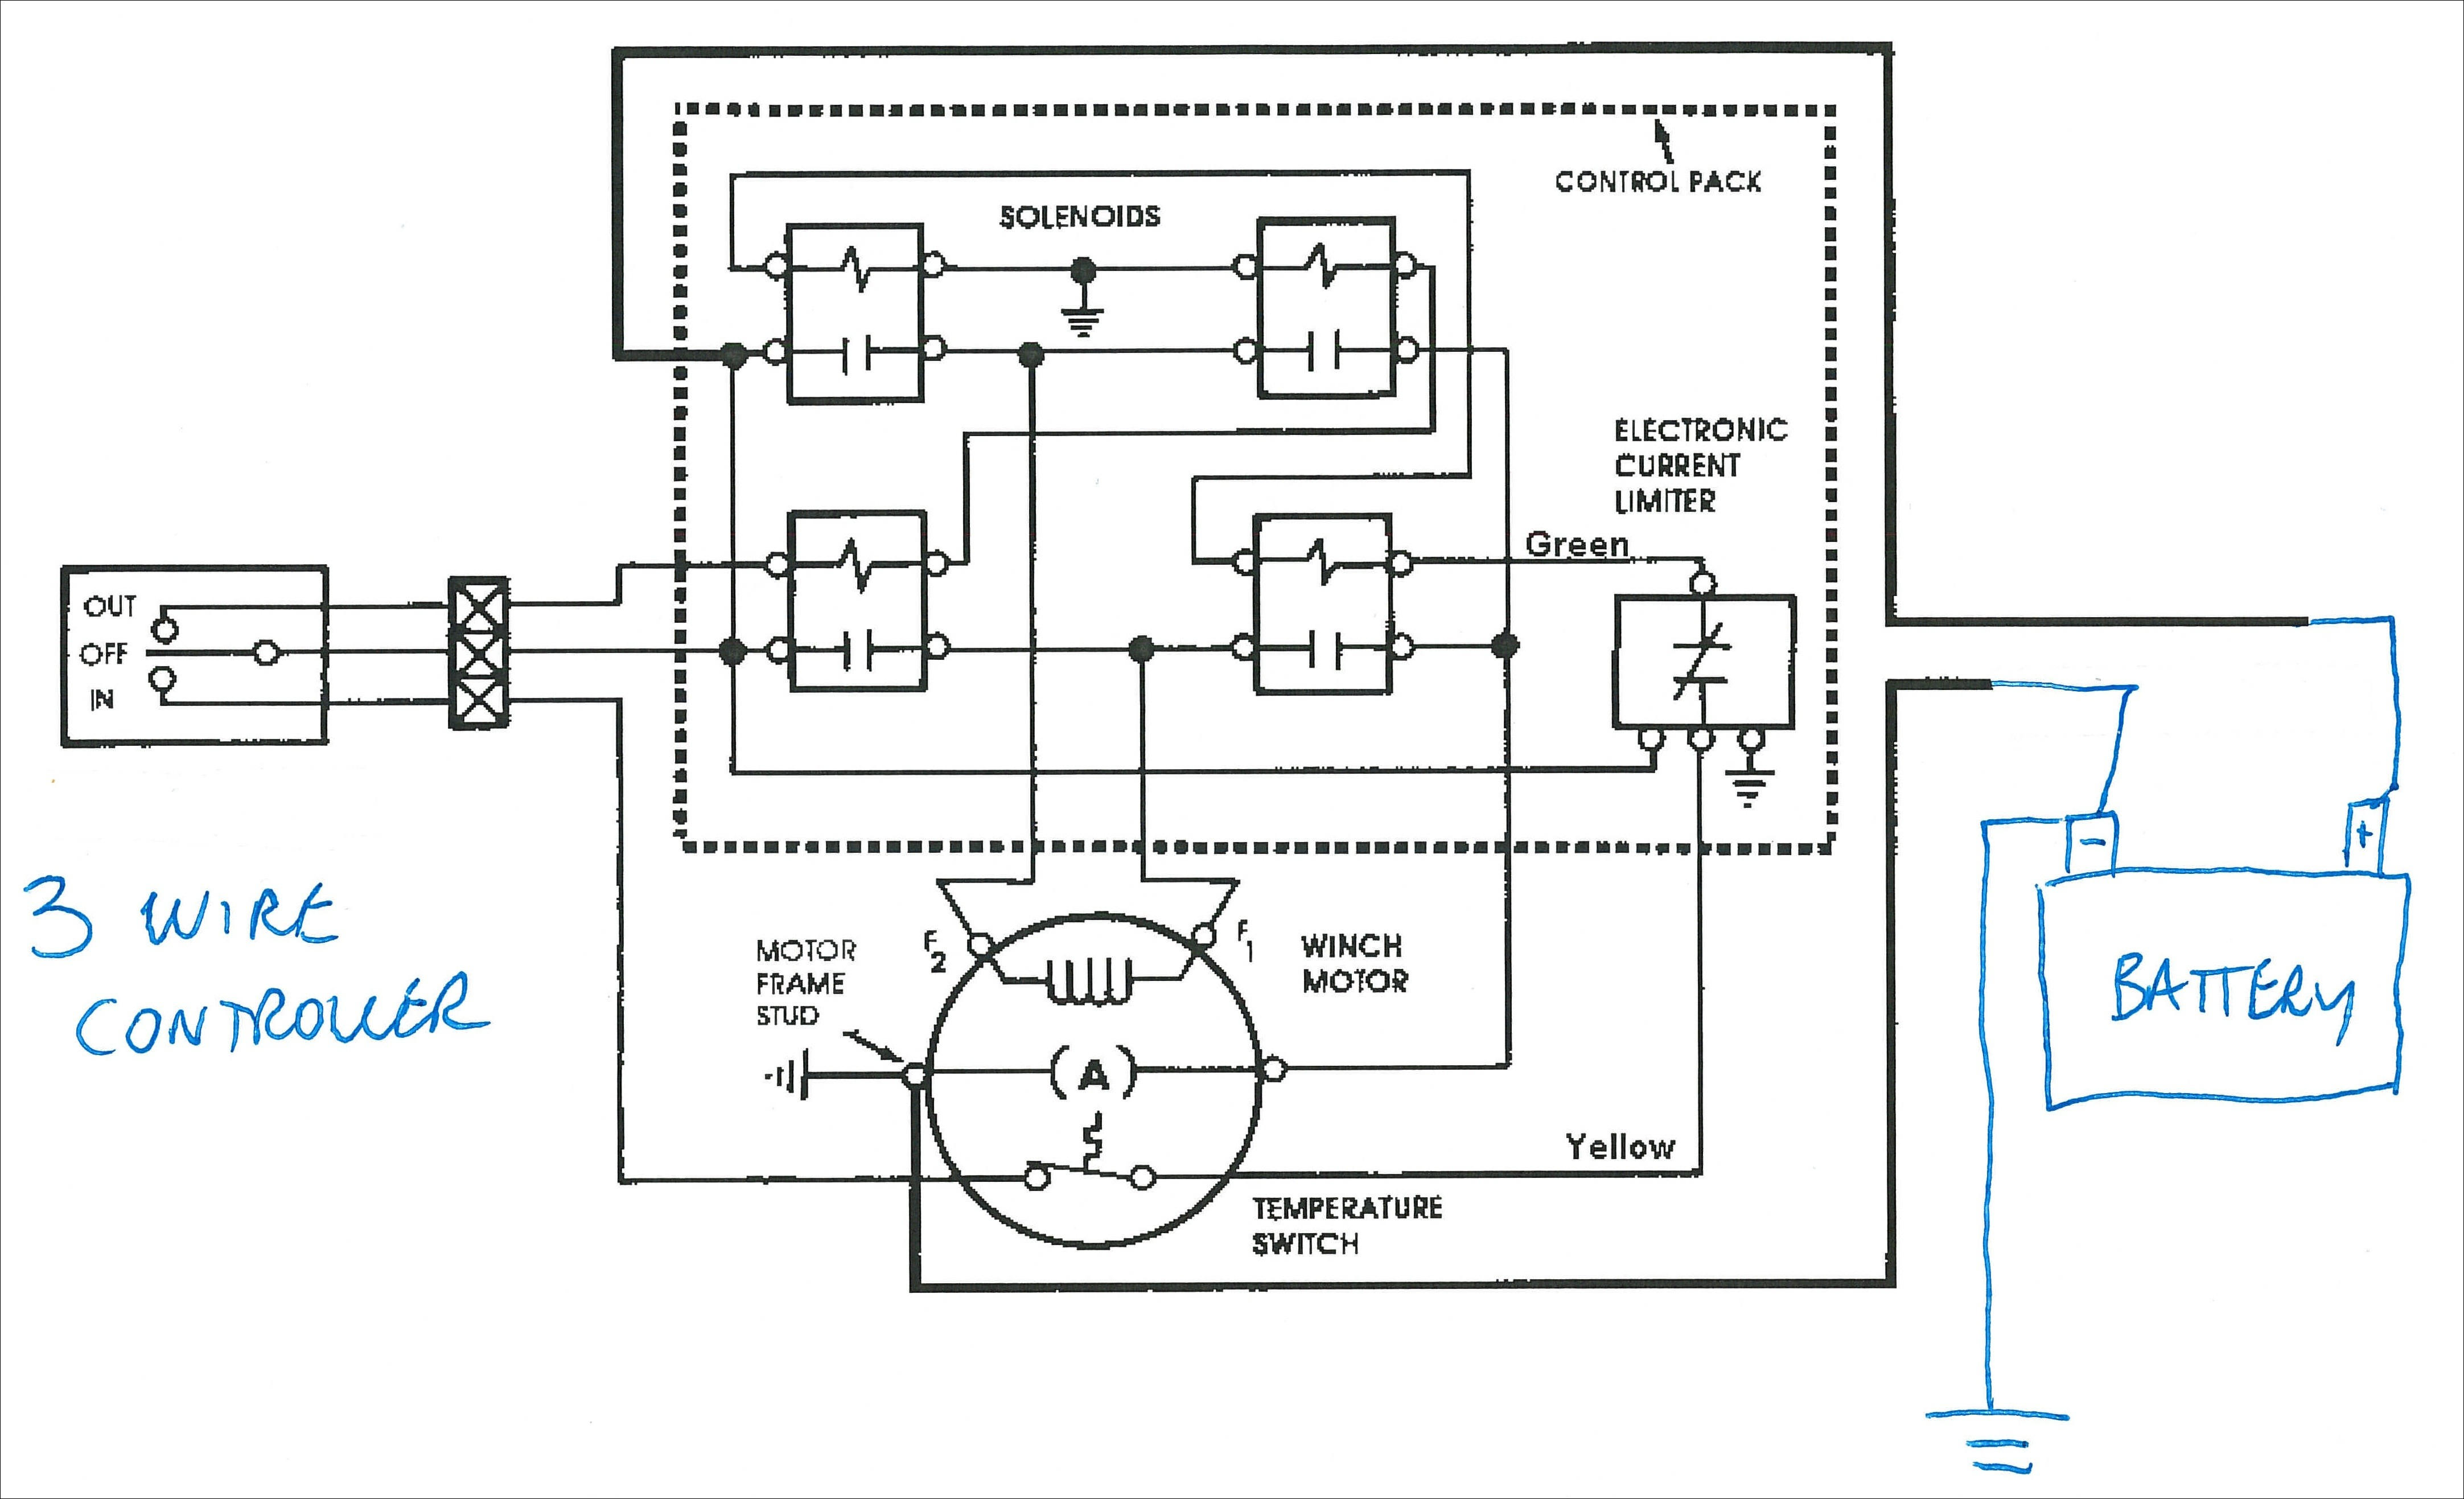 Warn Diagram Wiring Winch 1500 | Wiring Library - Warn Winch Wiring Diagram 4 Solenoid